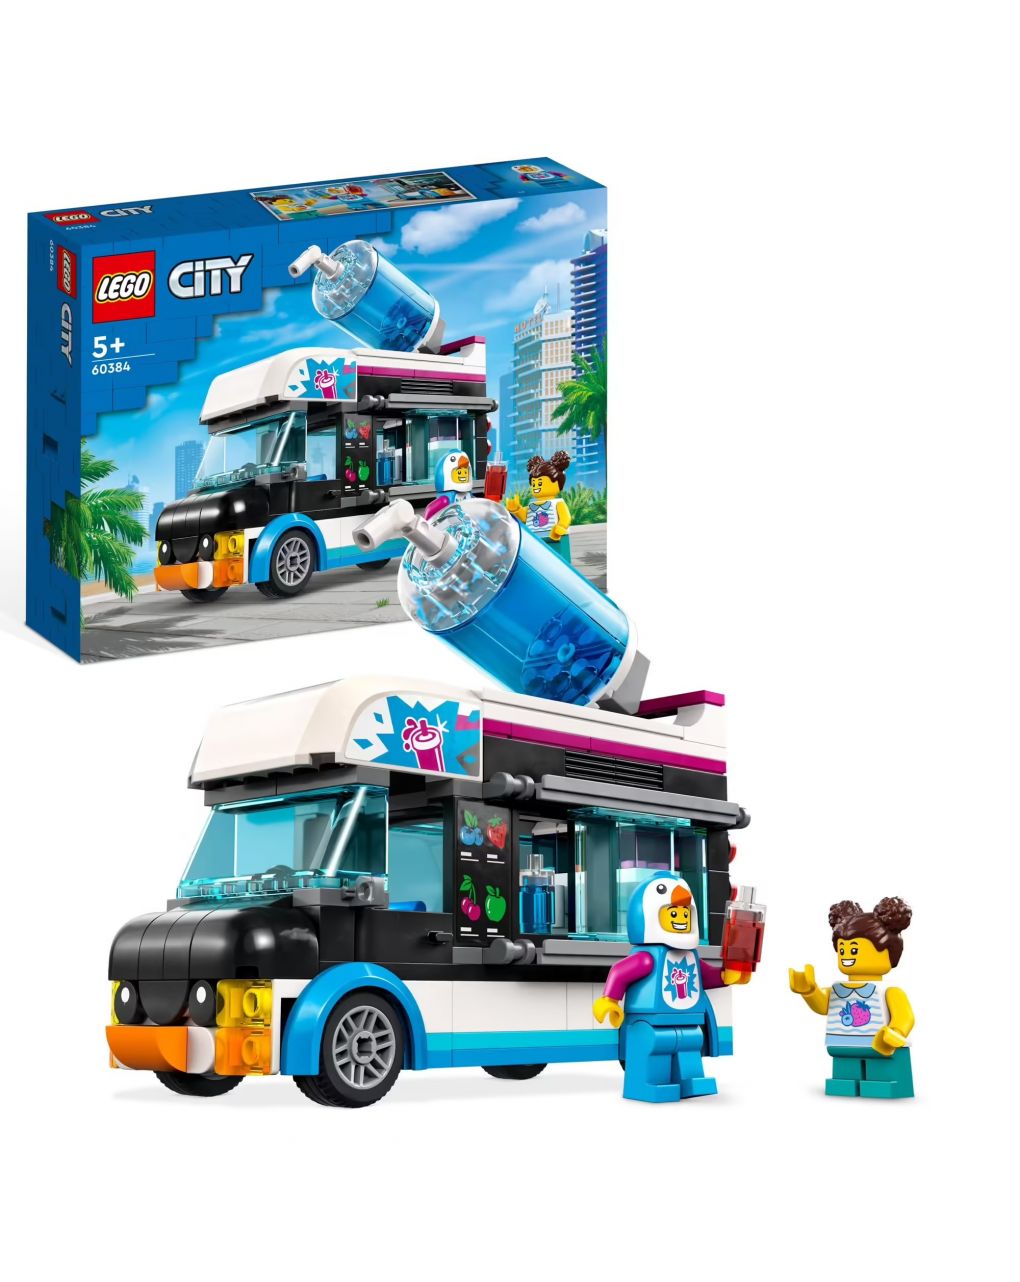 Lego city great vehicles penguin slushy van 60384